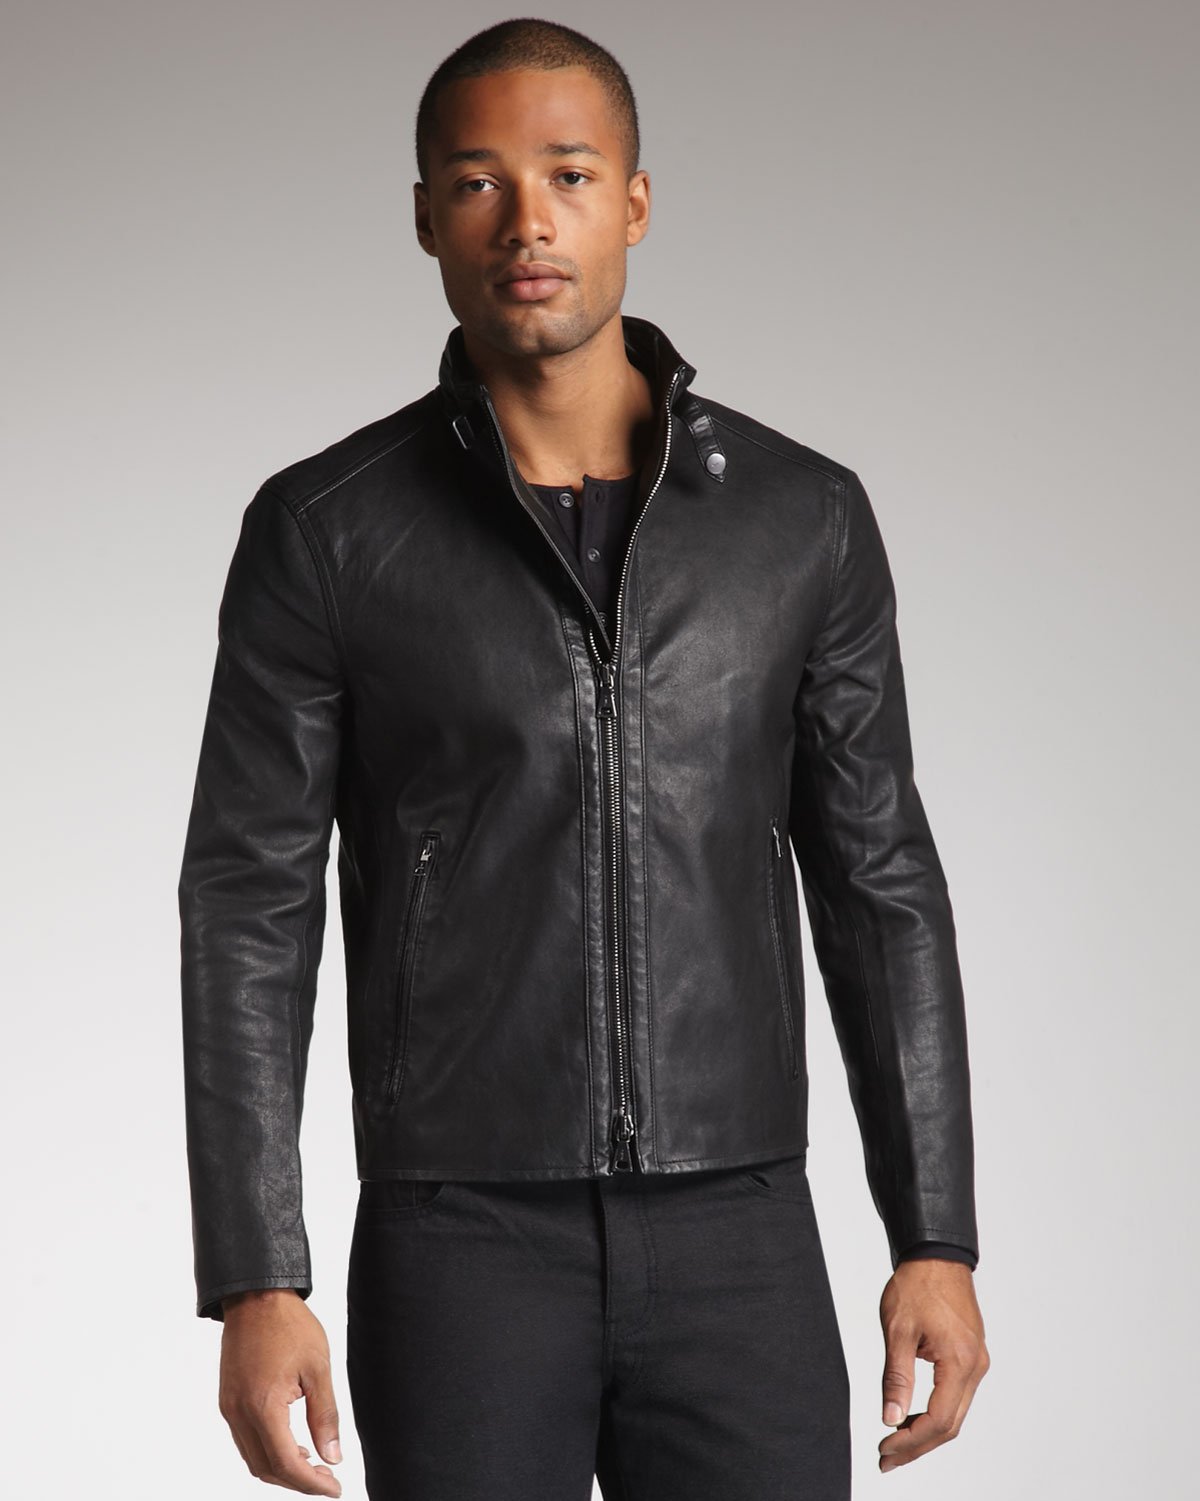 Lyst - John varvatos Mandarin-Collar Leather Jacket in Black for Men